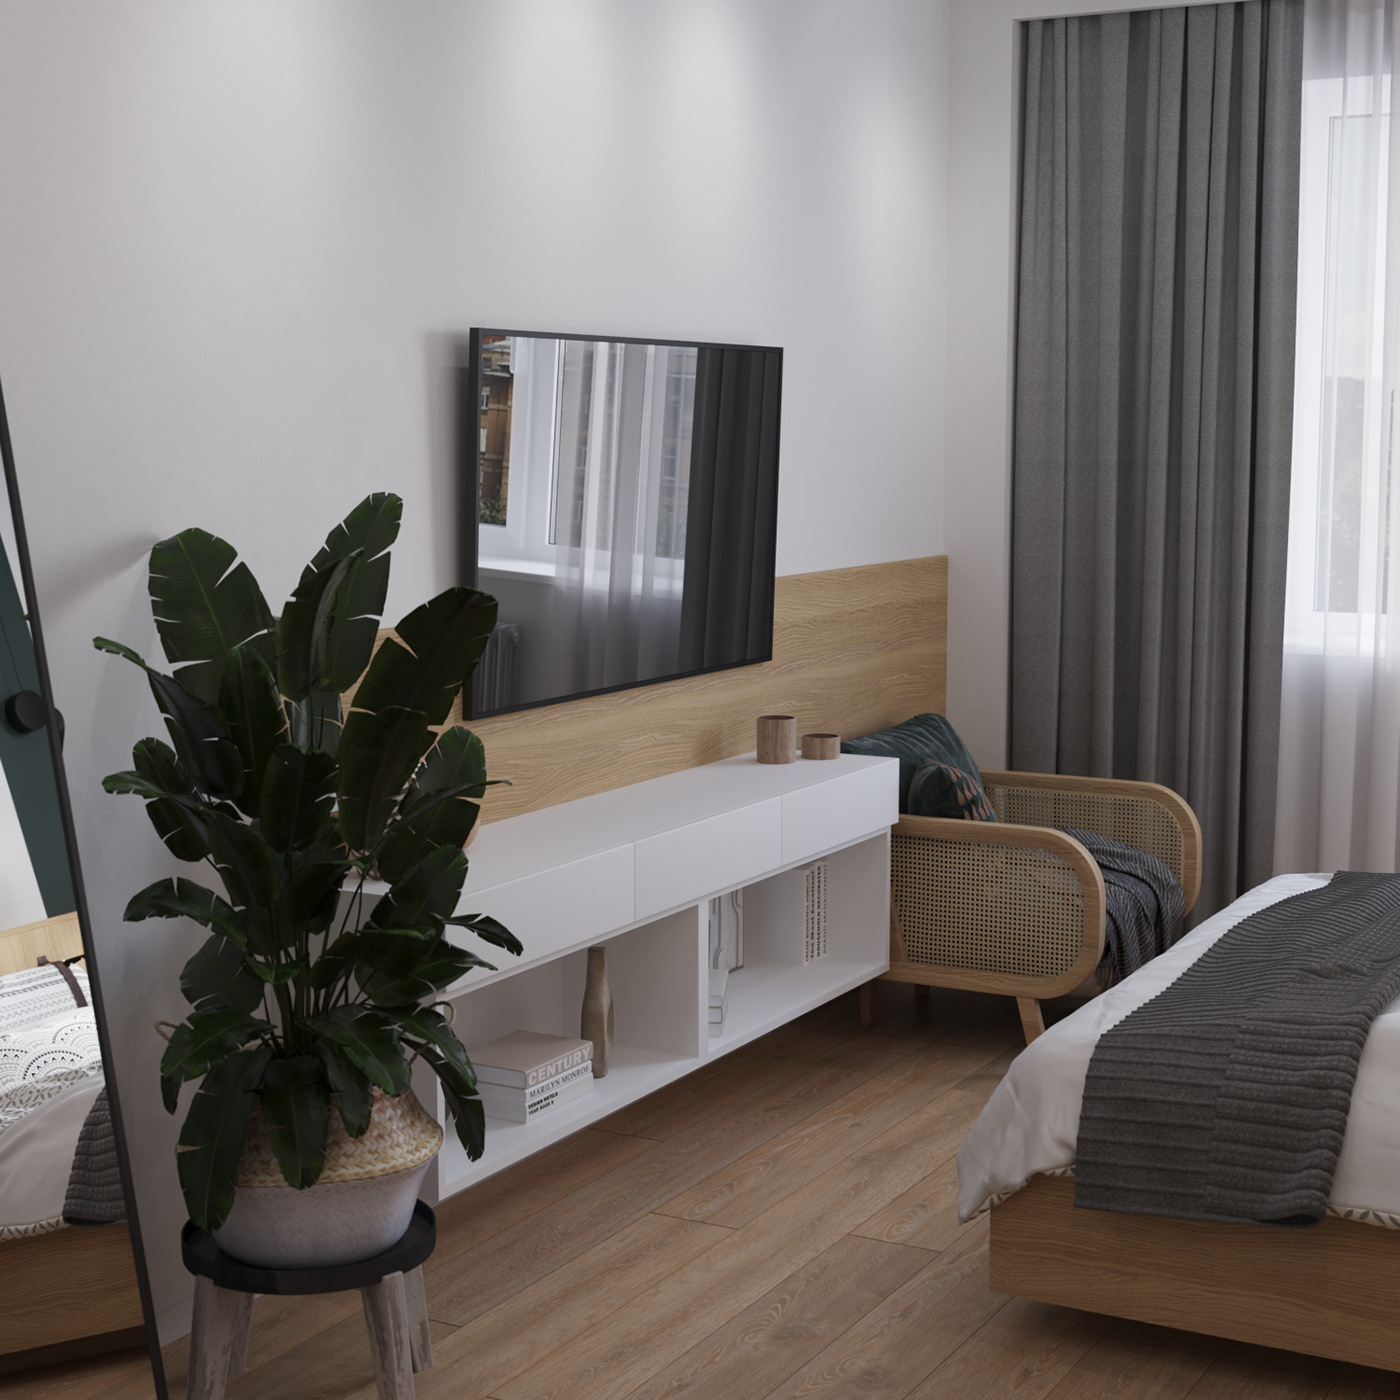 3ds max bedroom corona corona render  Interior interior design  Render visualization